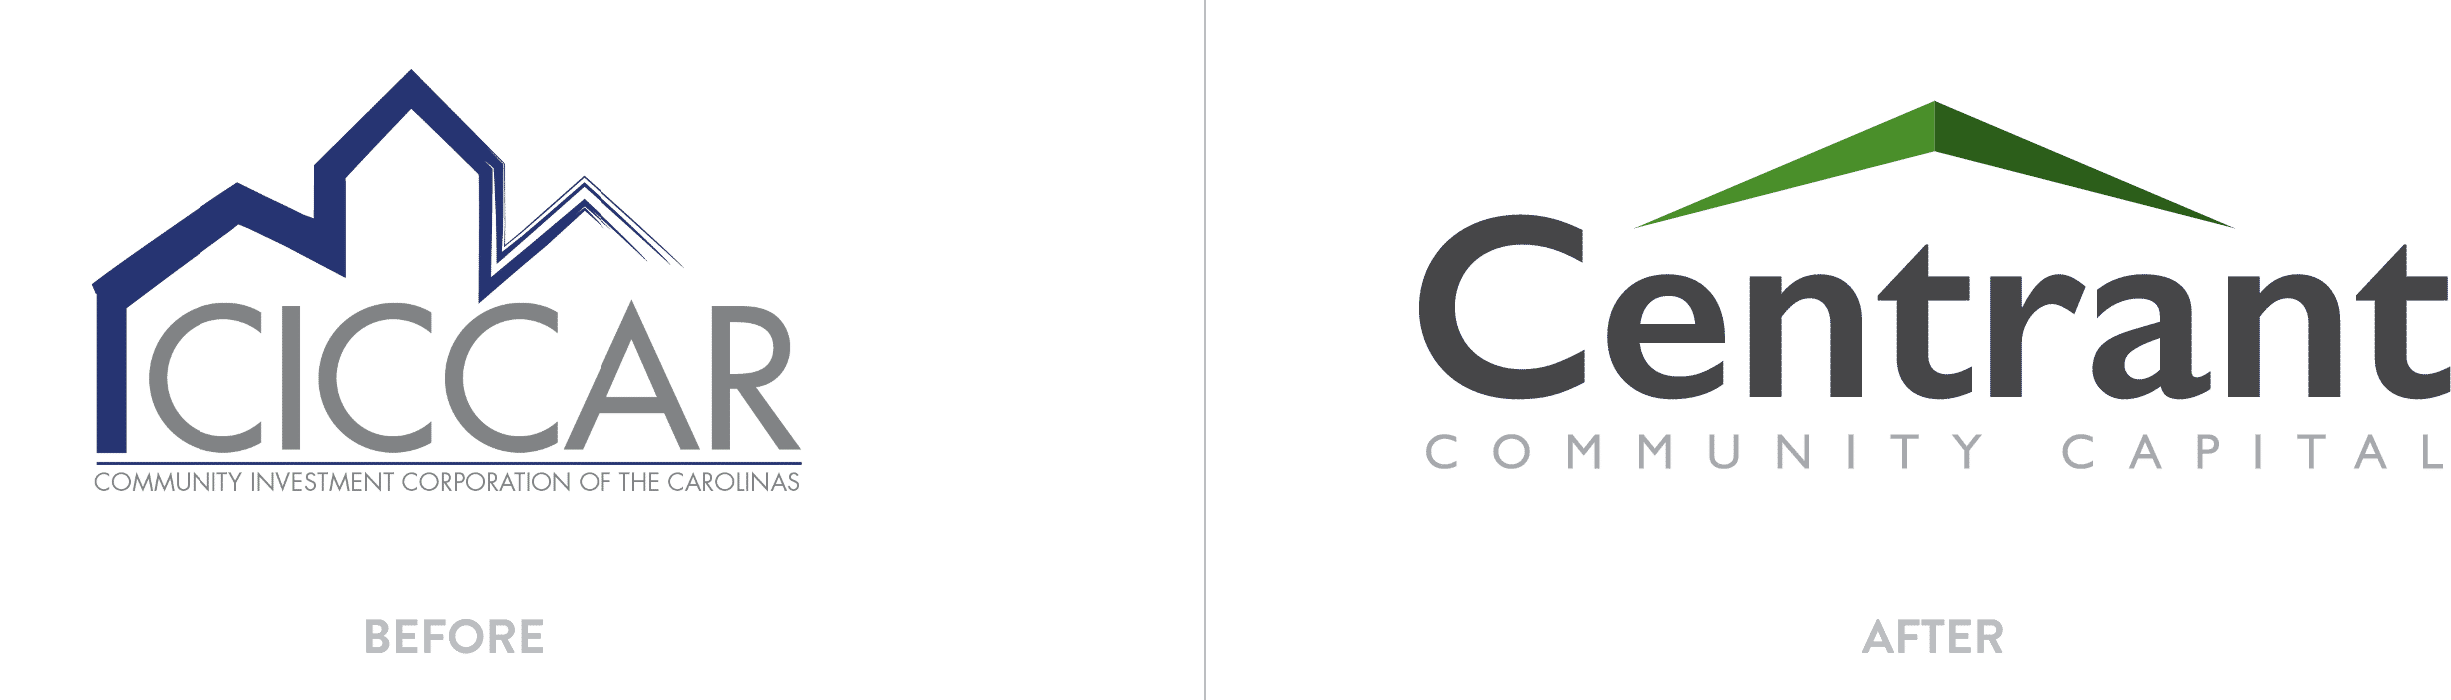 CICCAR and centrant's nonprofits logo